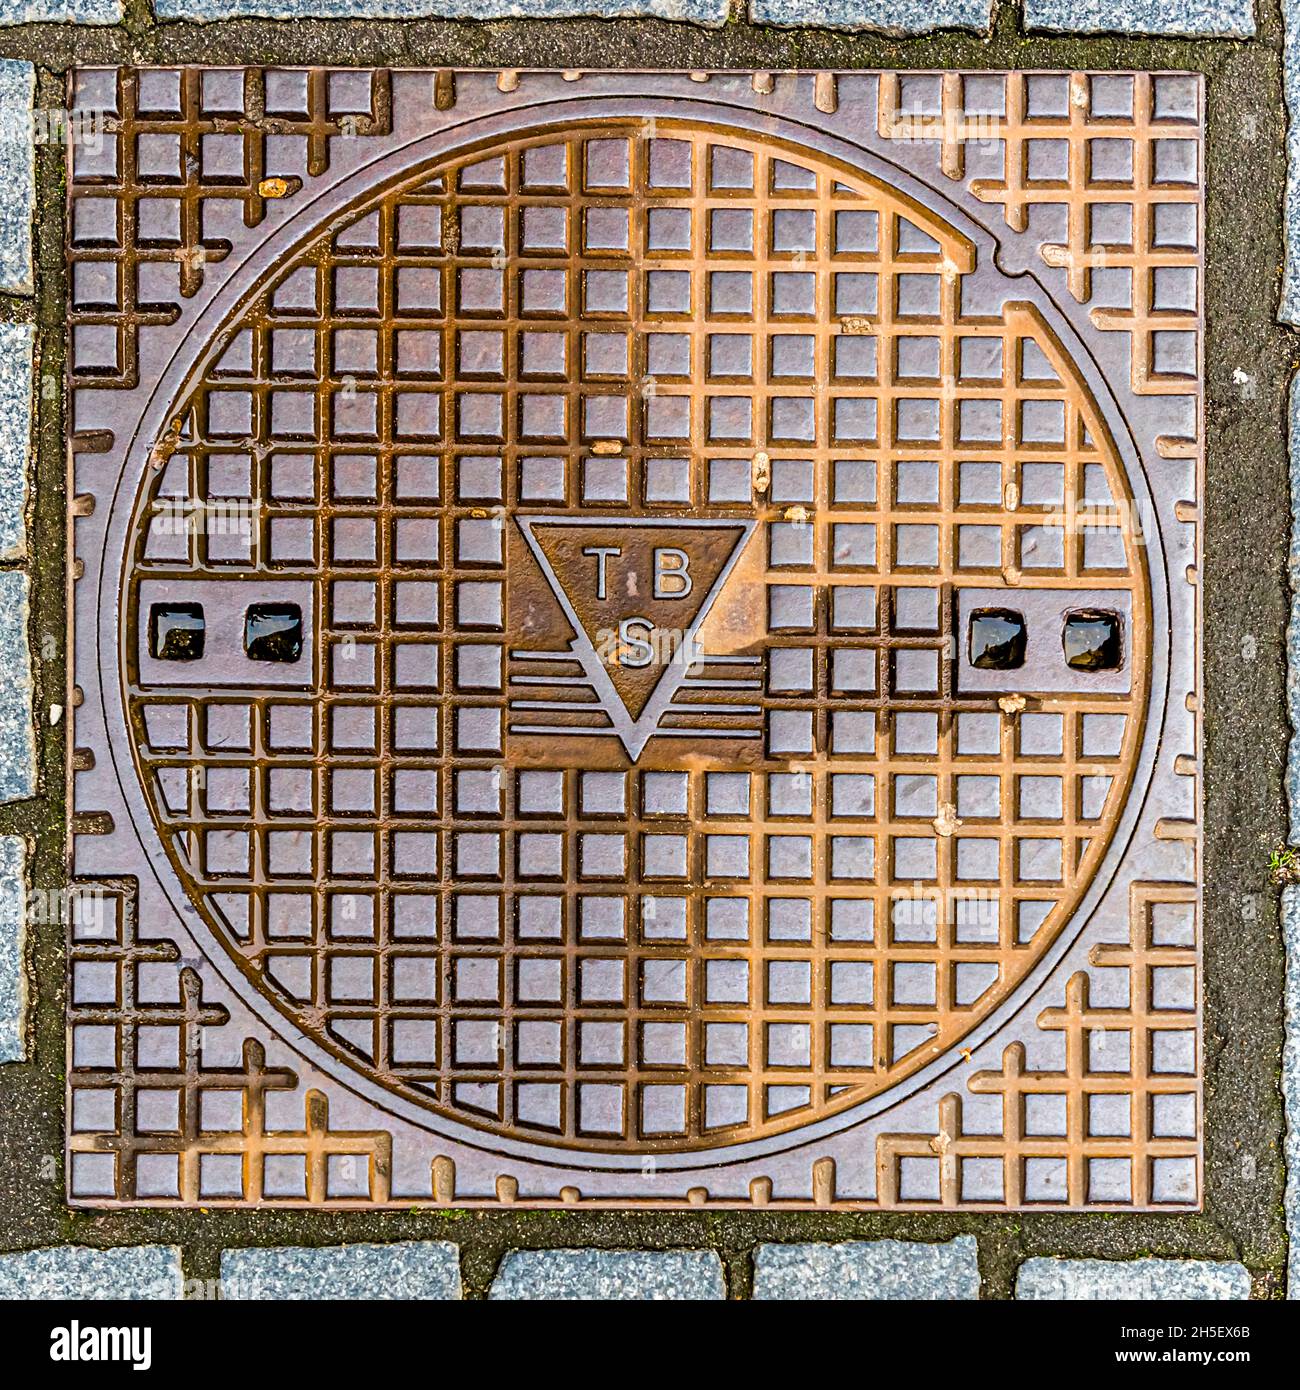 Manhole cover in Zutphen, Netherlands Stock Photo